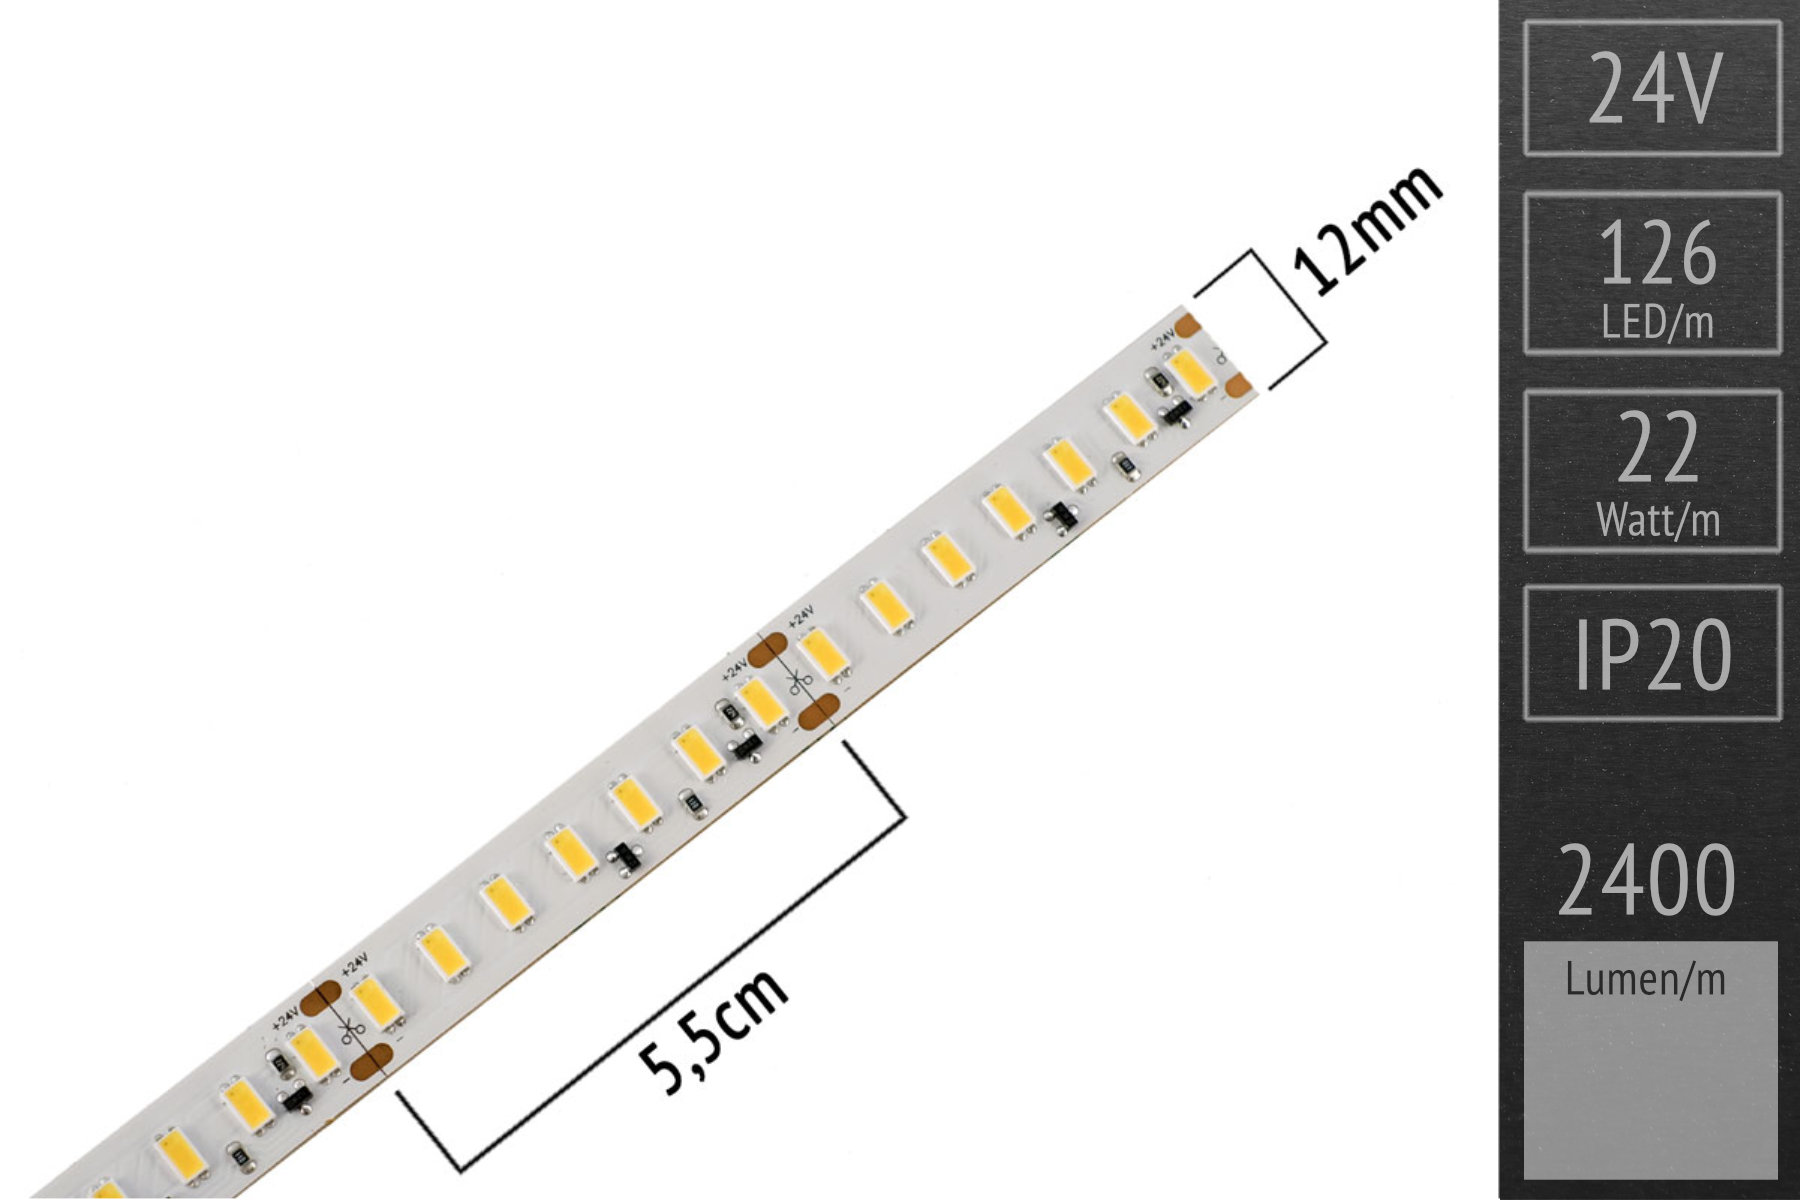 Highest colour quality with CRI>95: LED strip 5630 - 126 LED/m - 2,500 lm/m - 4.000K neutral white - IP20 5m roll